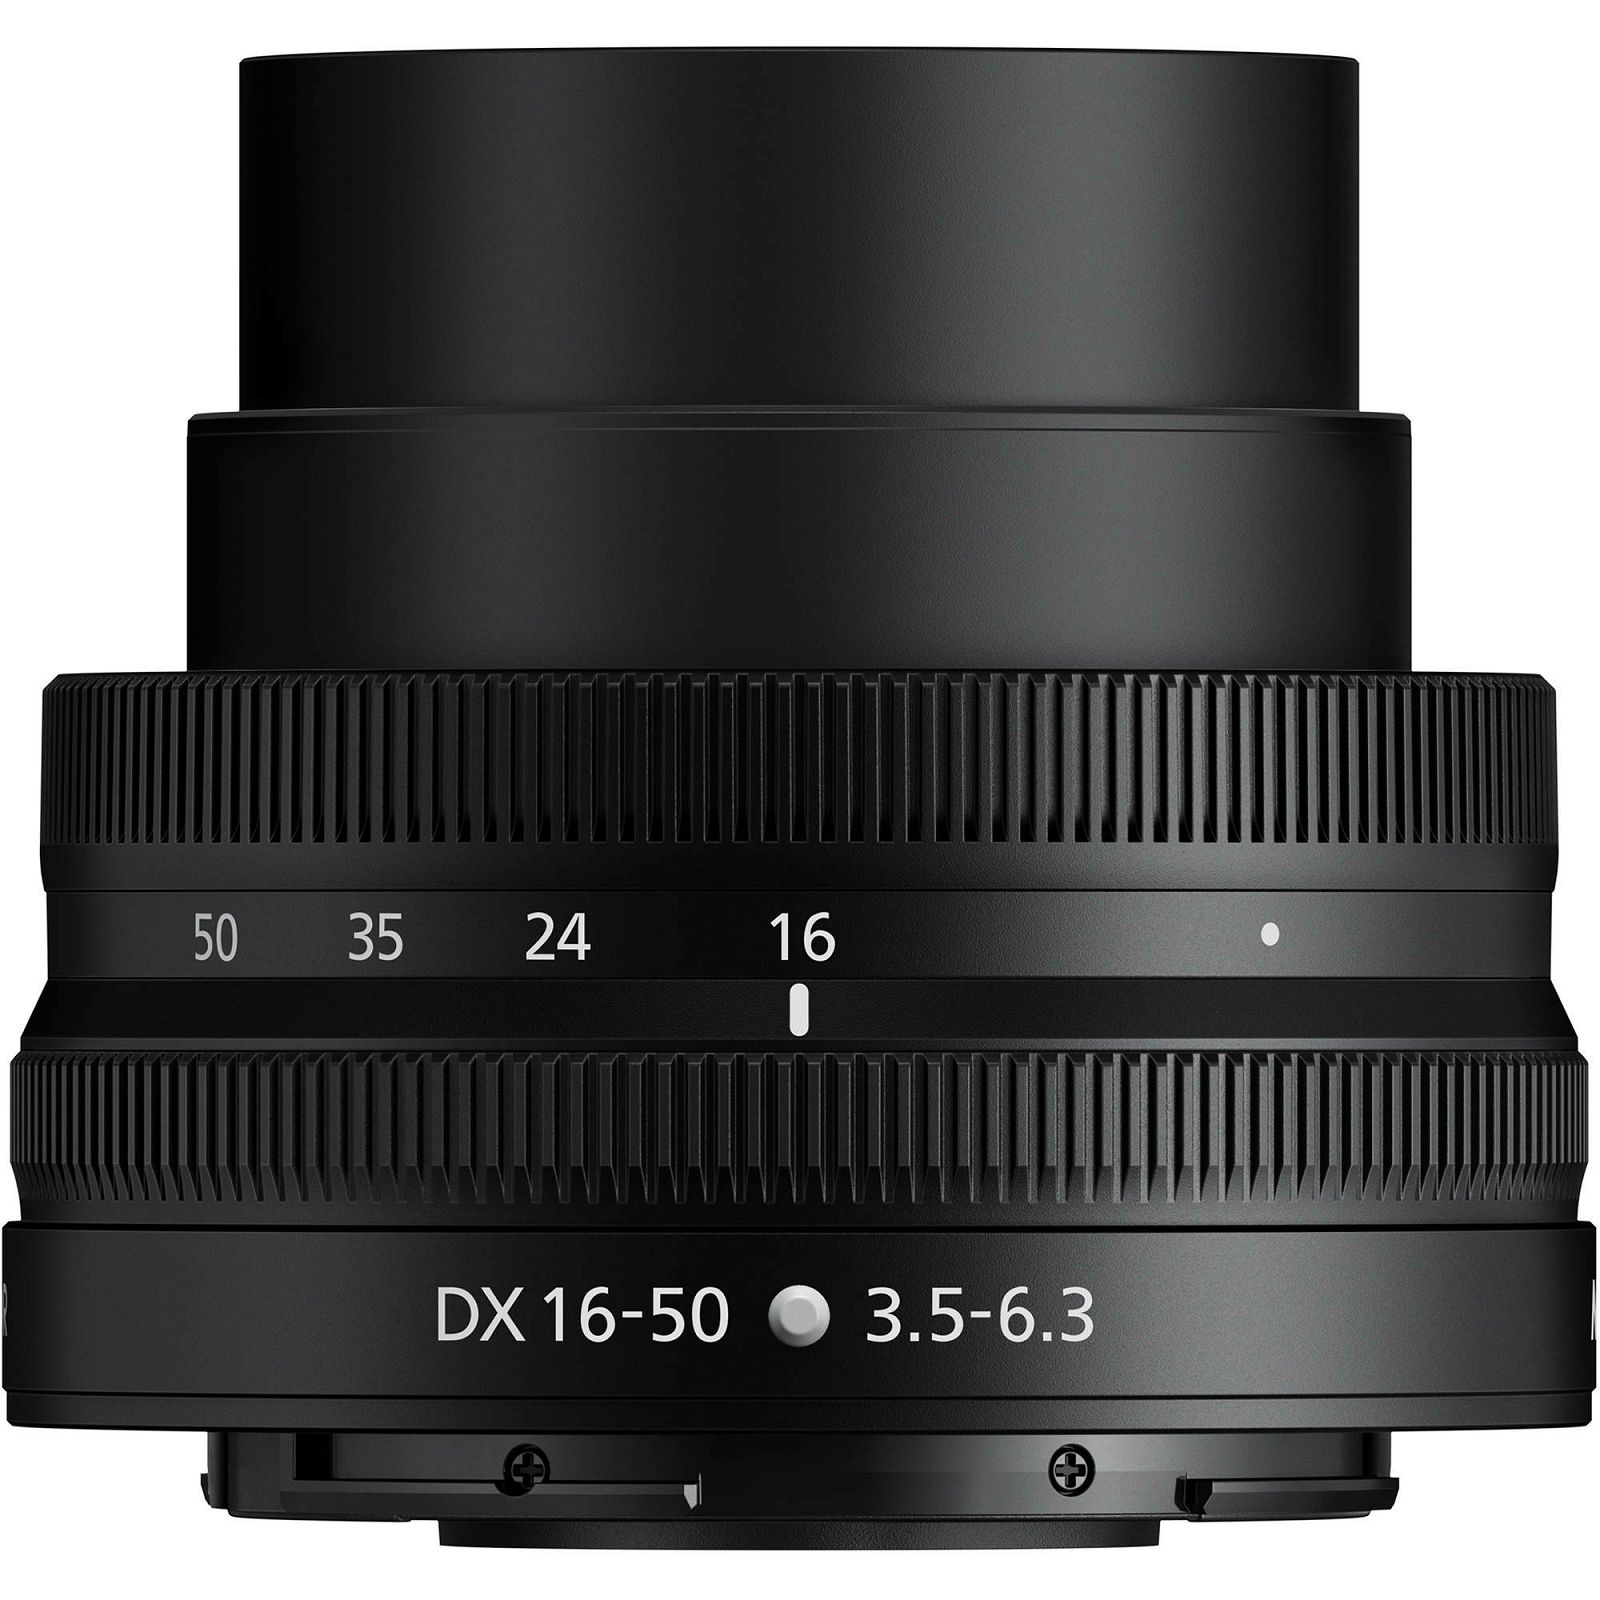 Nikon Z 16-50mm f/3.5-6.3 DX Nikkor objektiv (JMA706DA)